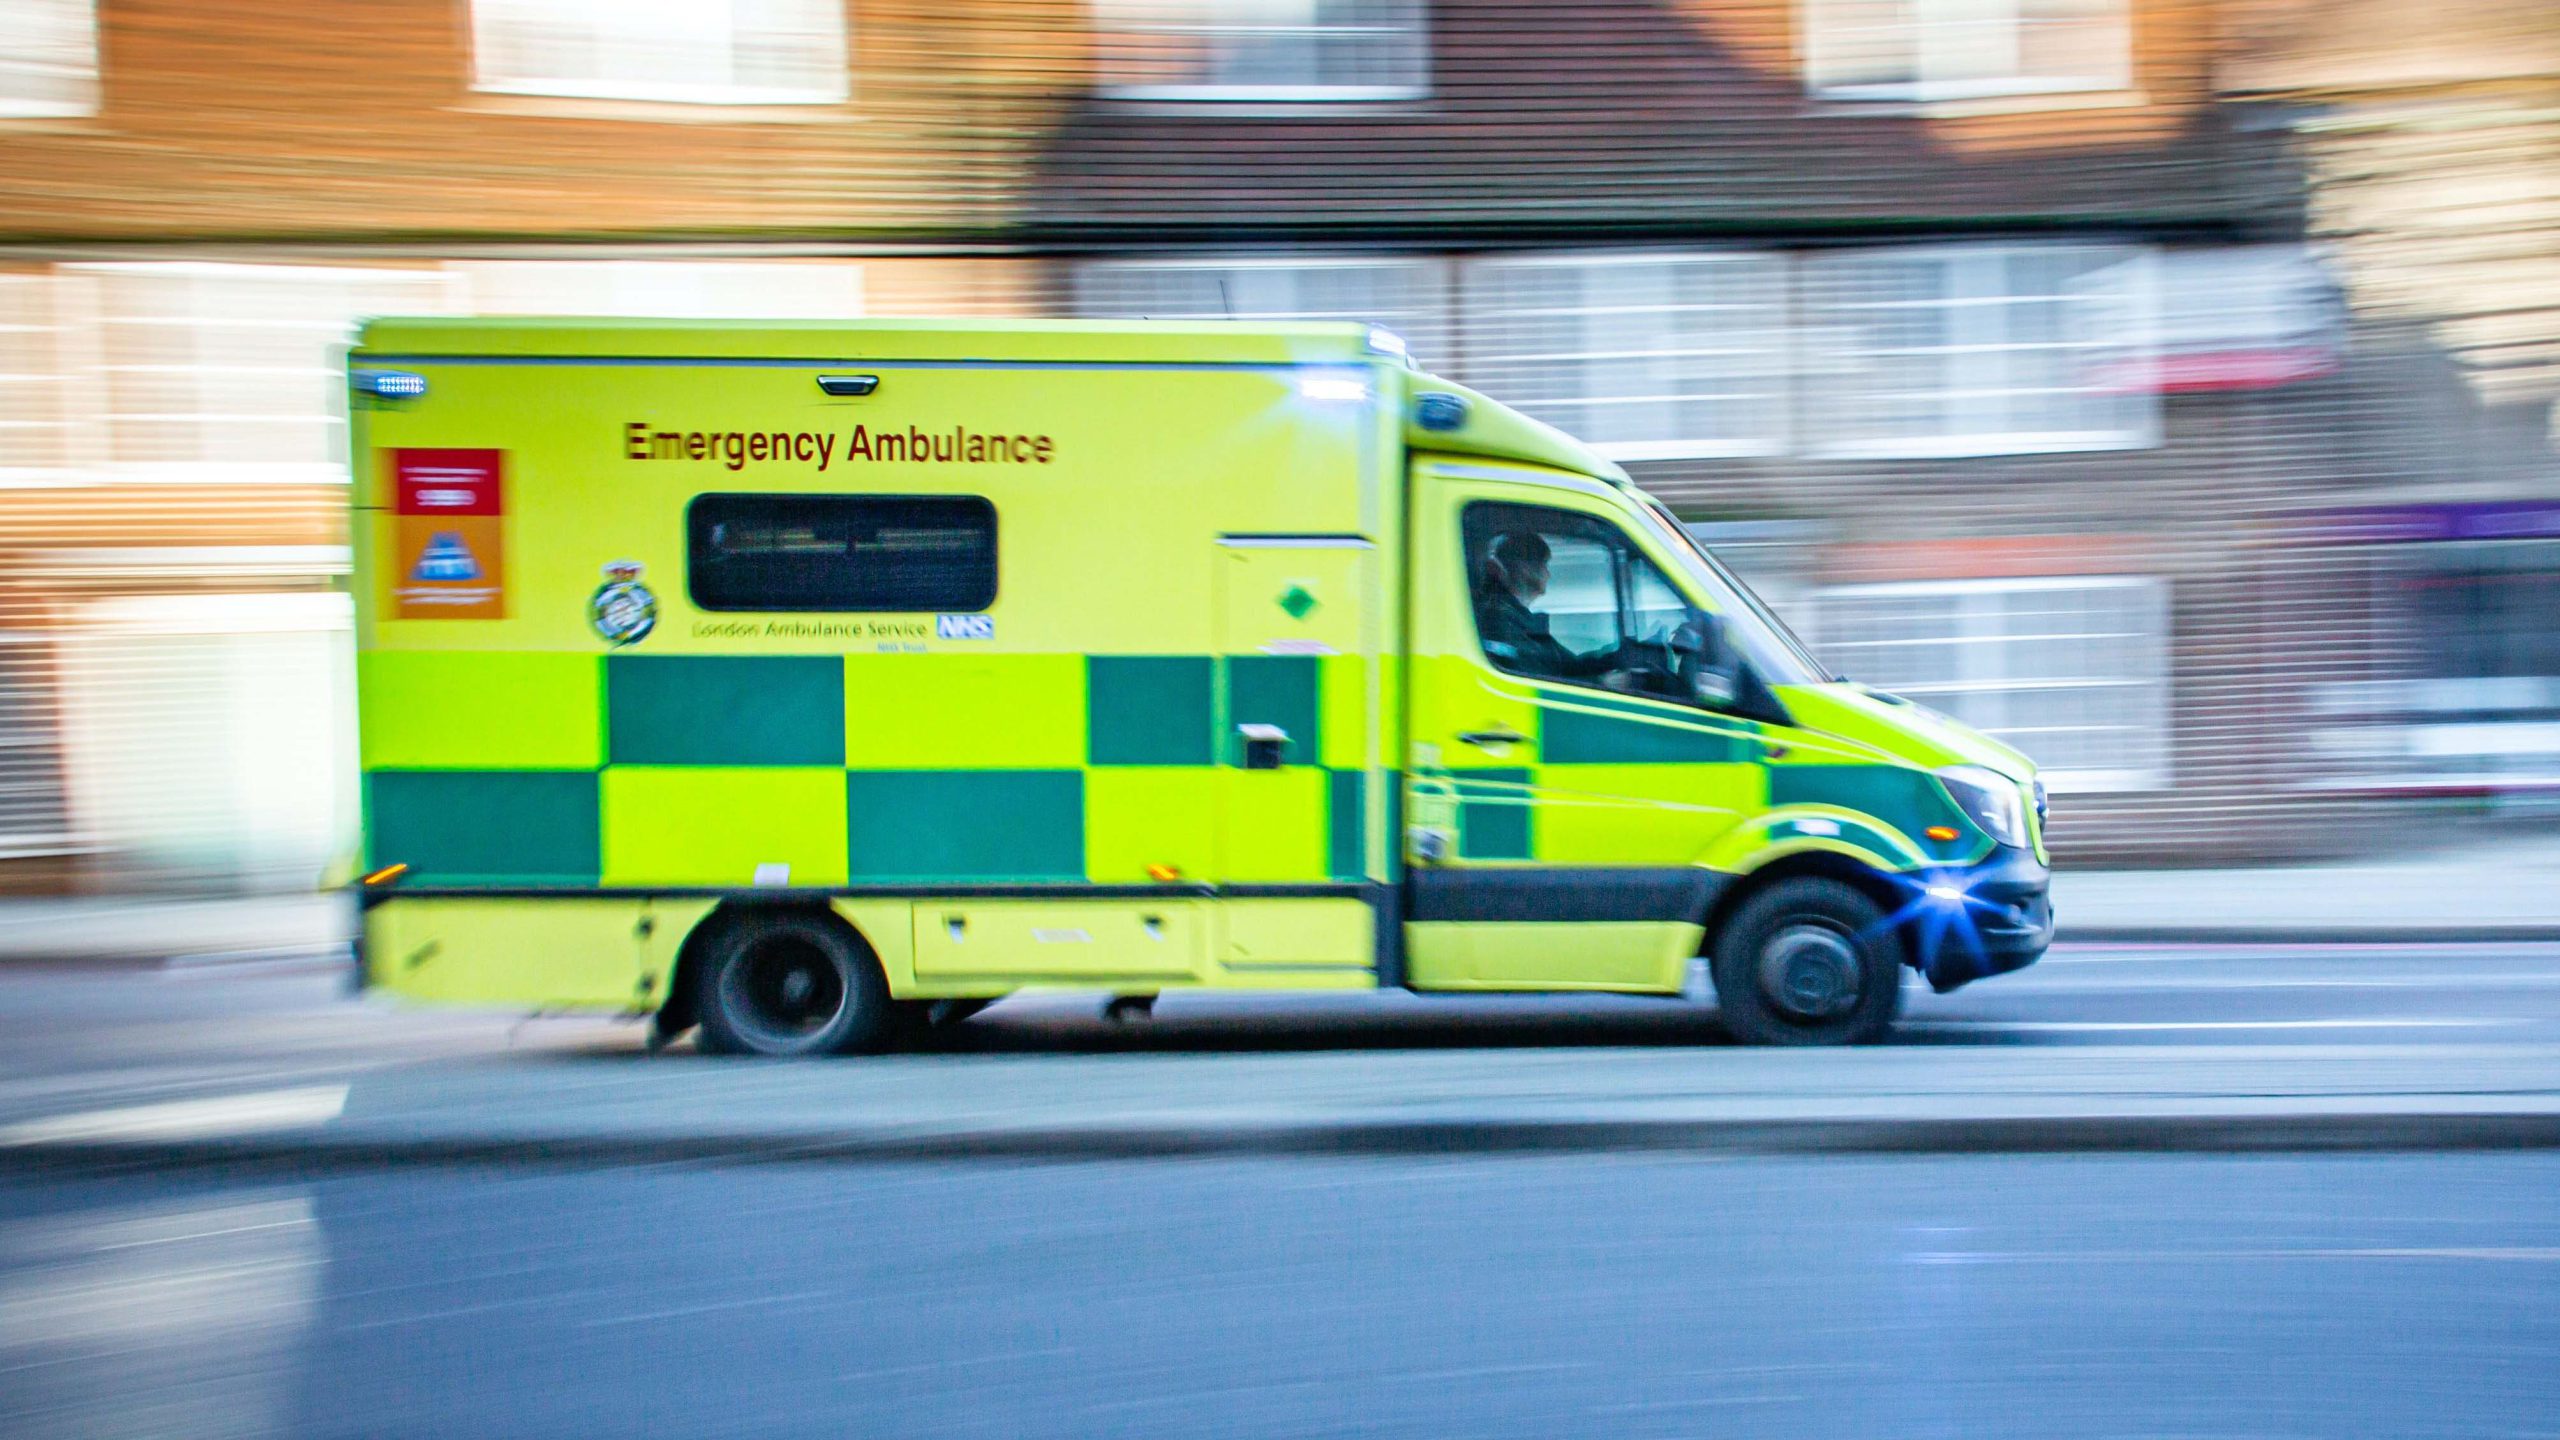 An emergency ambulance speeding along a suburban street